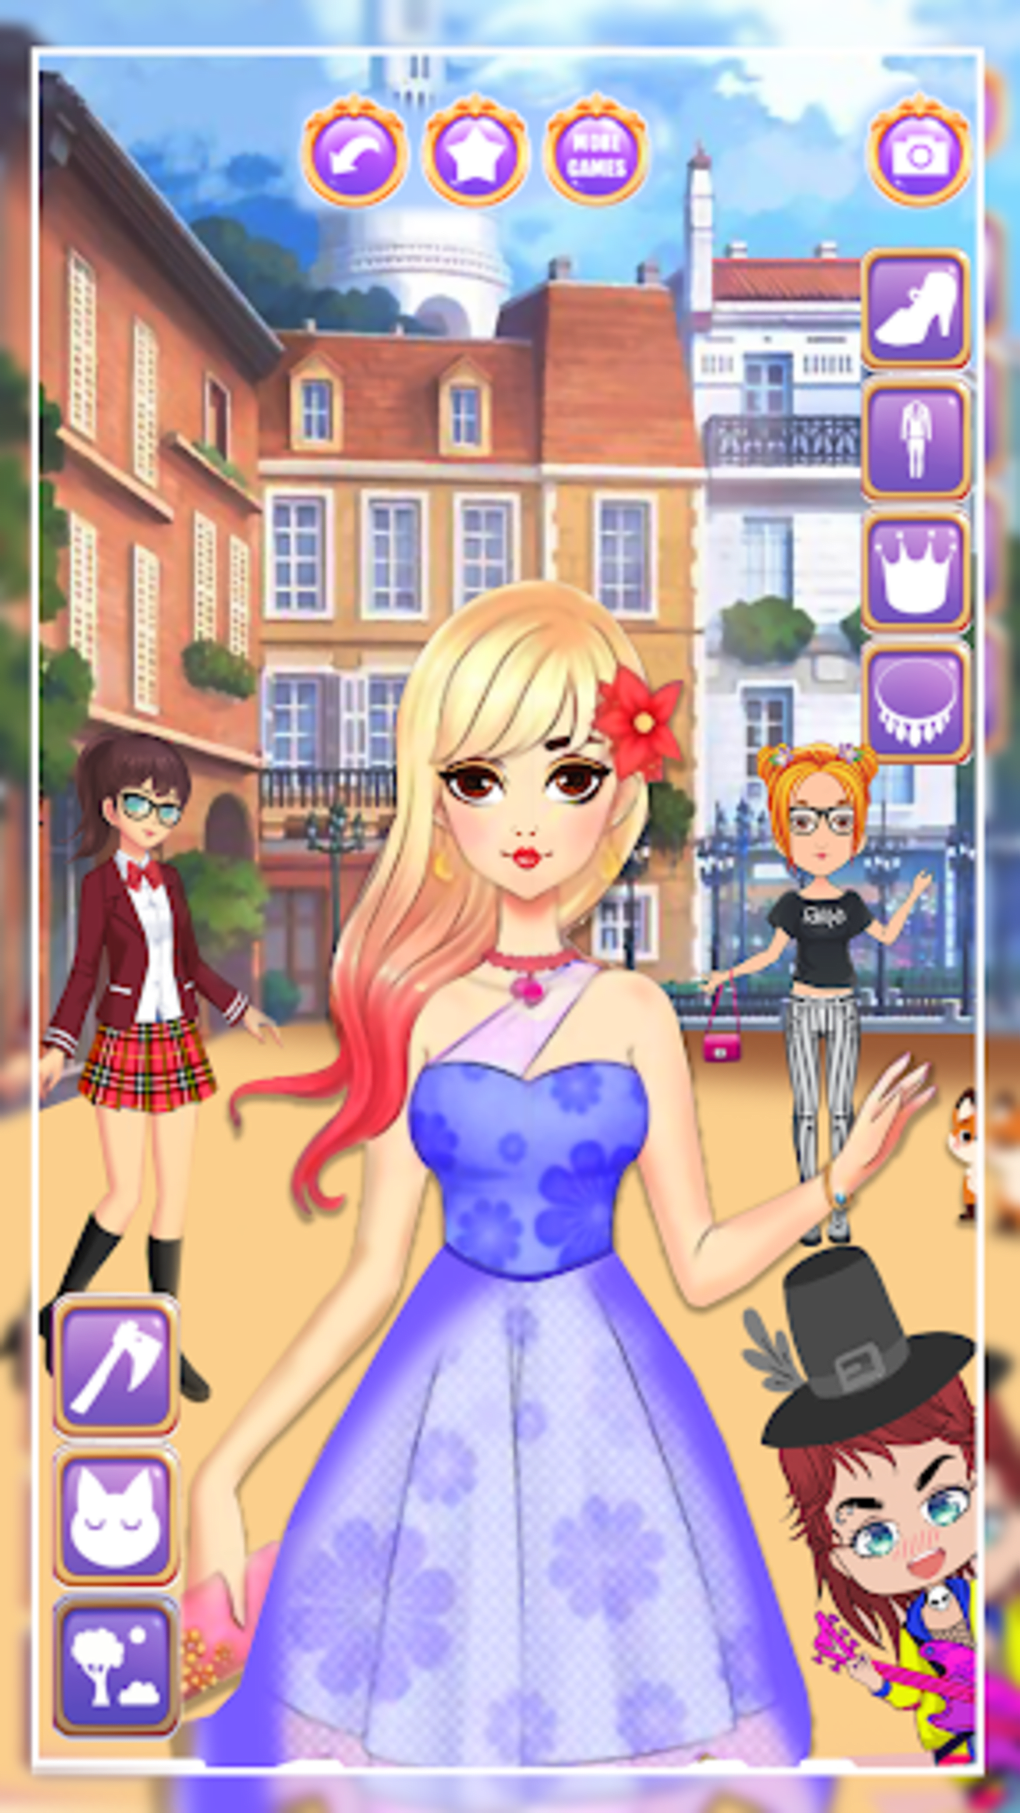 Chibi Doll: Dress up game para Android - Download